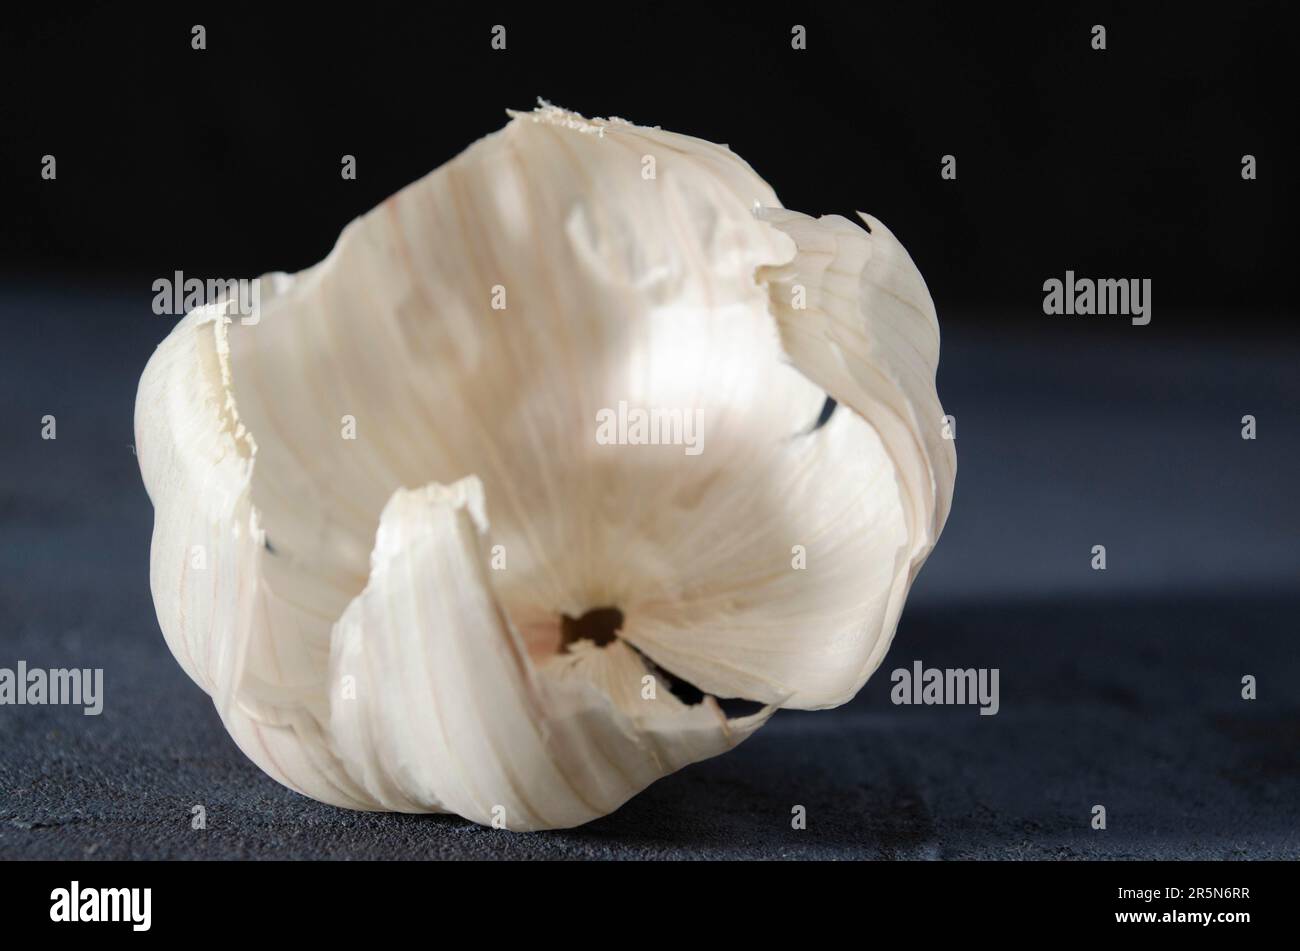 Garlic skin on the dark background Stock Photo